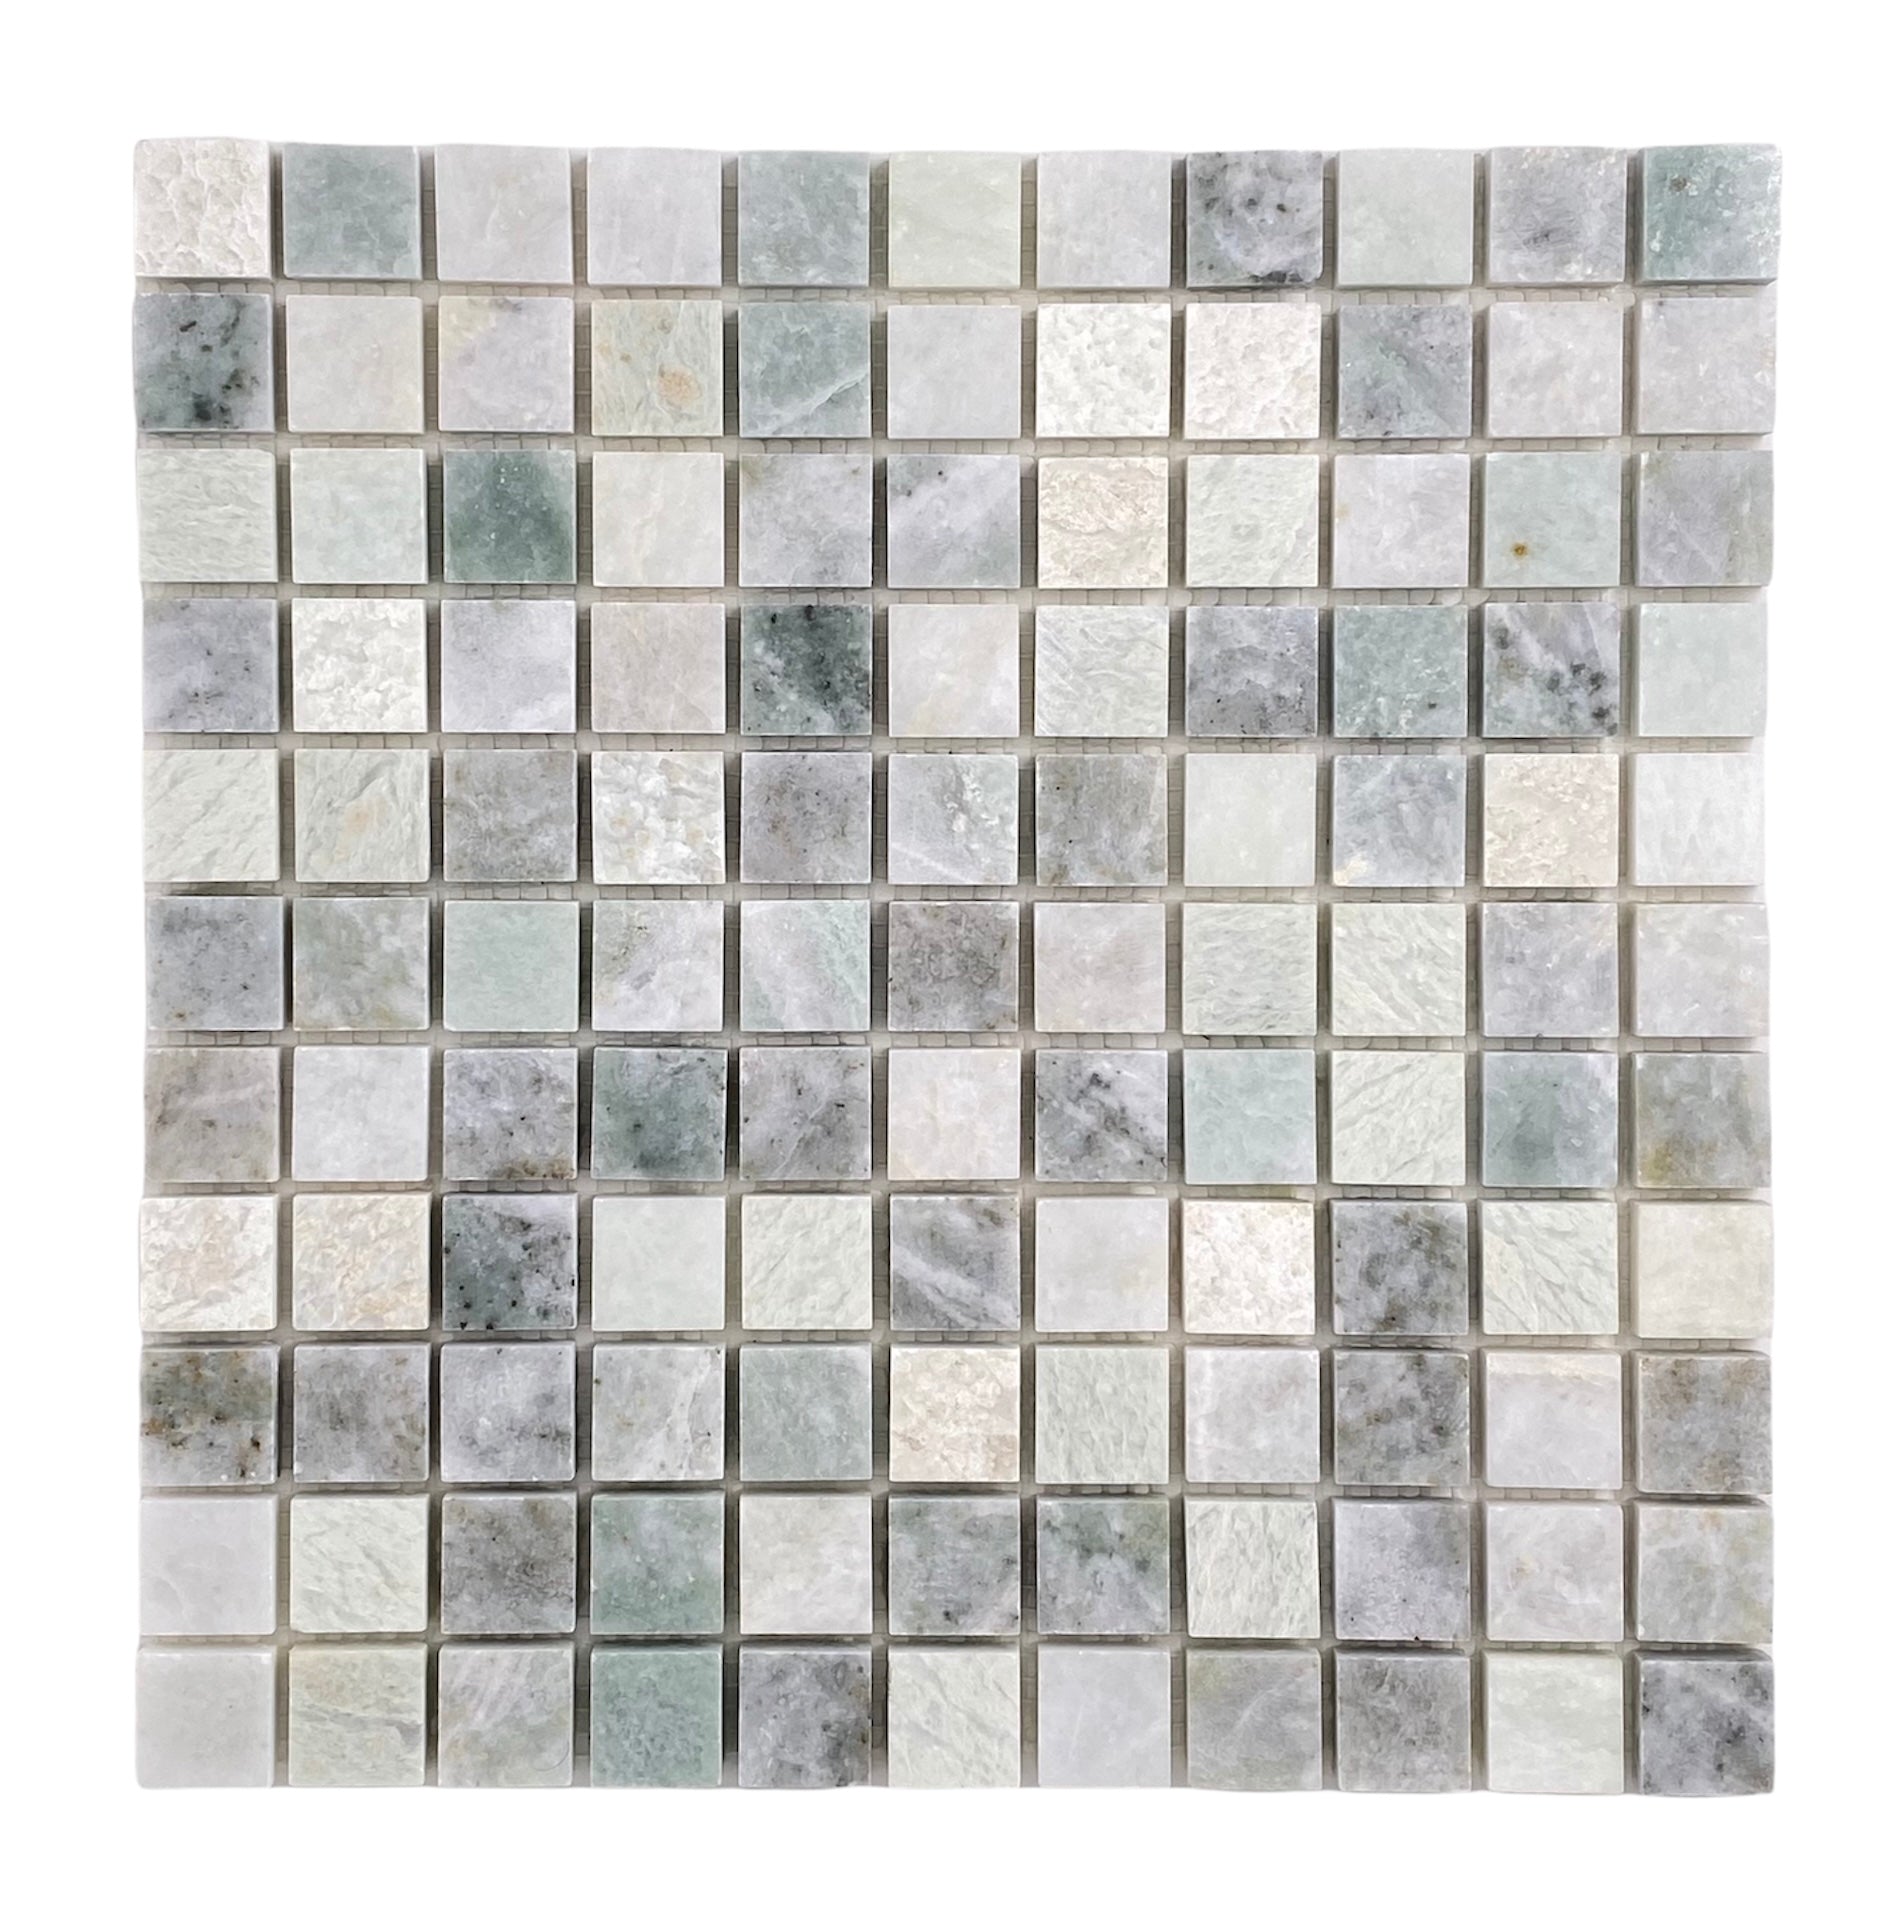 Ming Green Marble Onyx Polished Square 1x1 Mosaic Tiles for Kitchen Backsplash Bathroom Flooring Shower